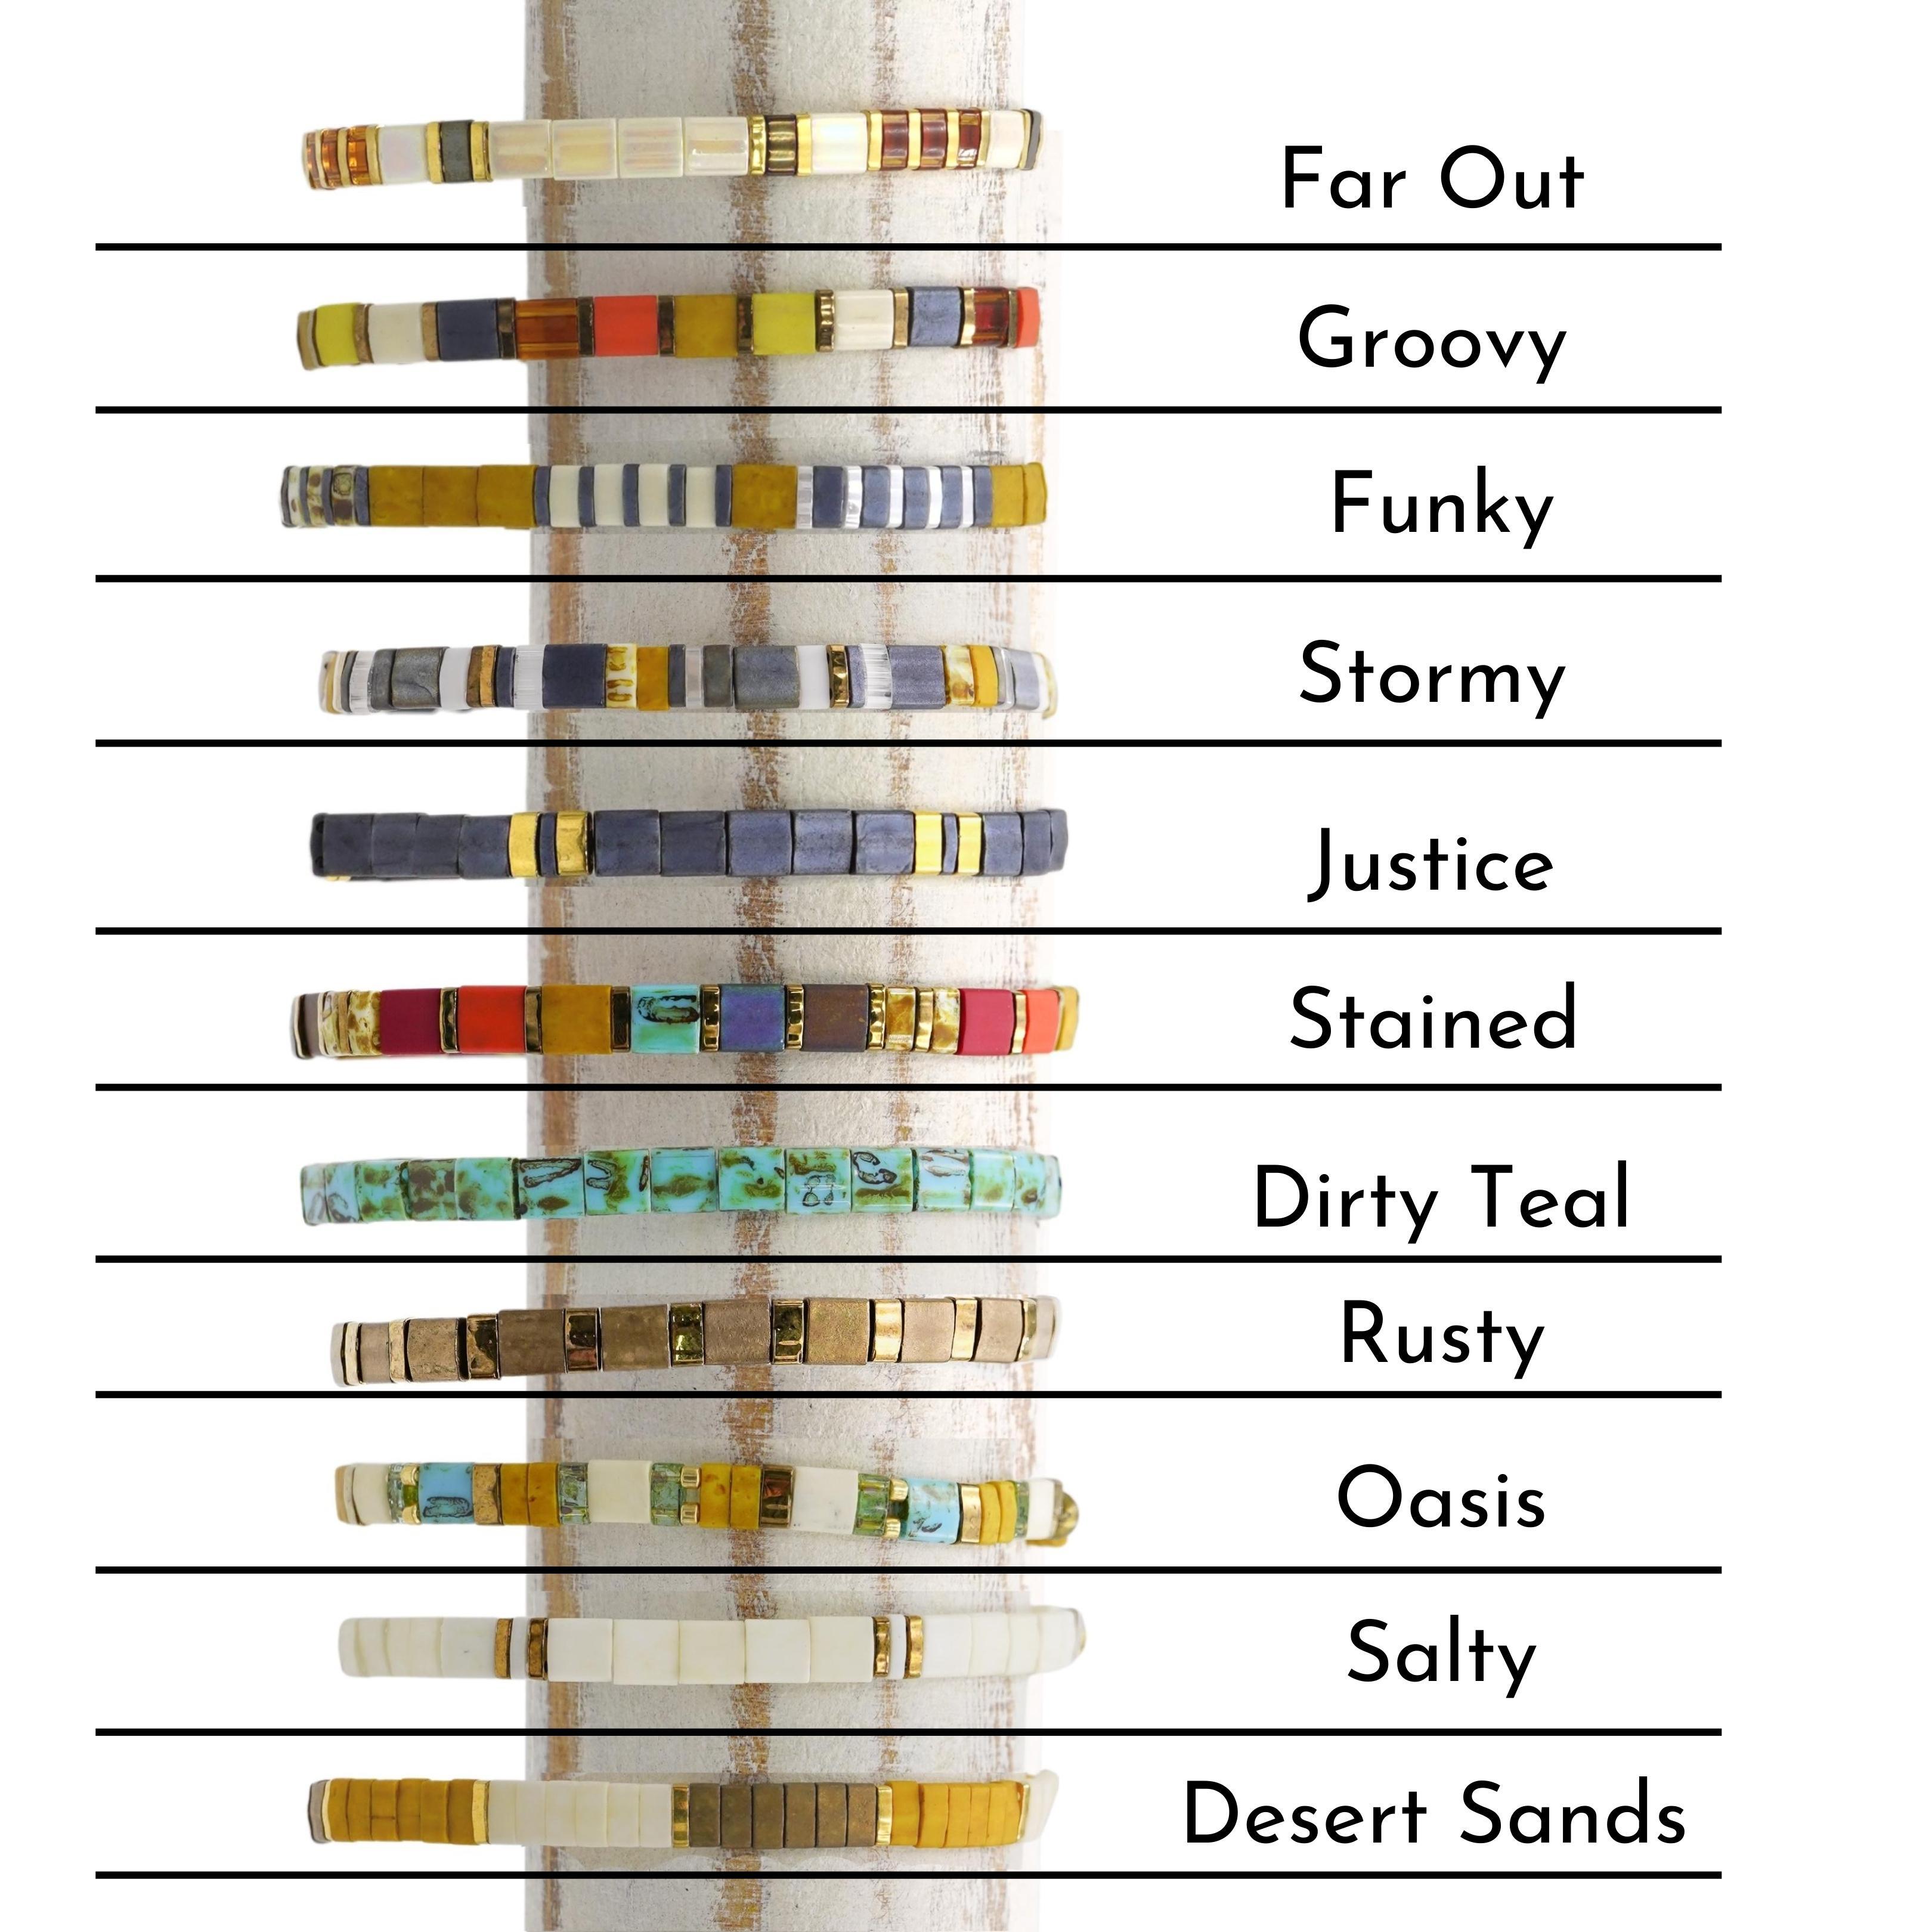 Pastel Tila Beads Color Pack - Makes 20 Bracelets – Mack & Rex